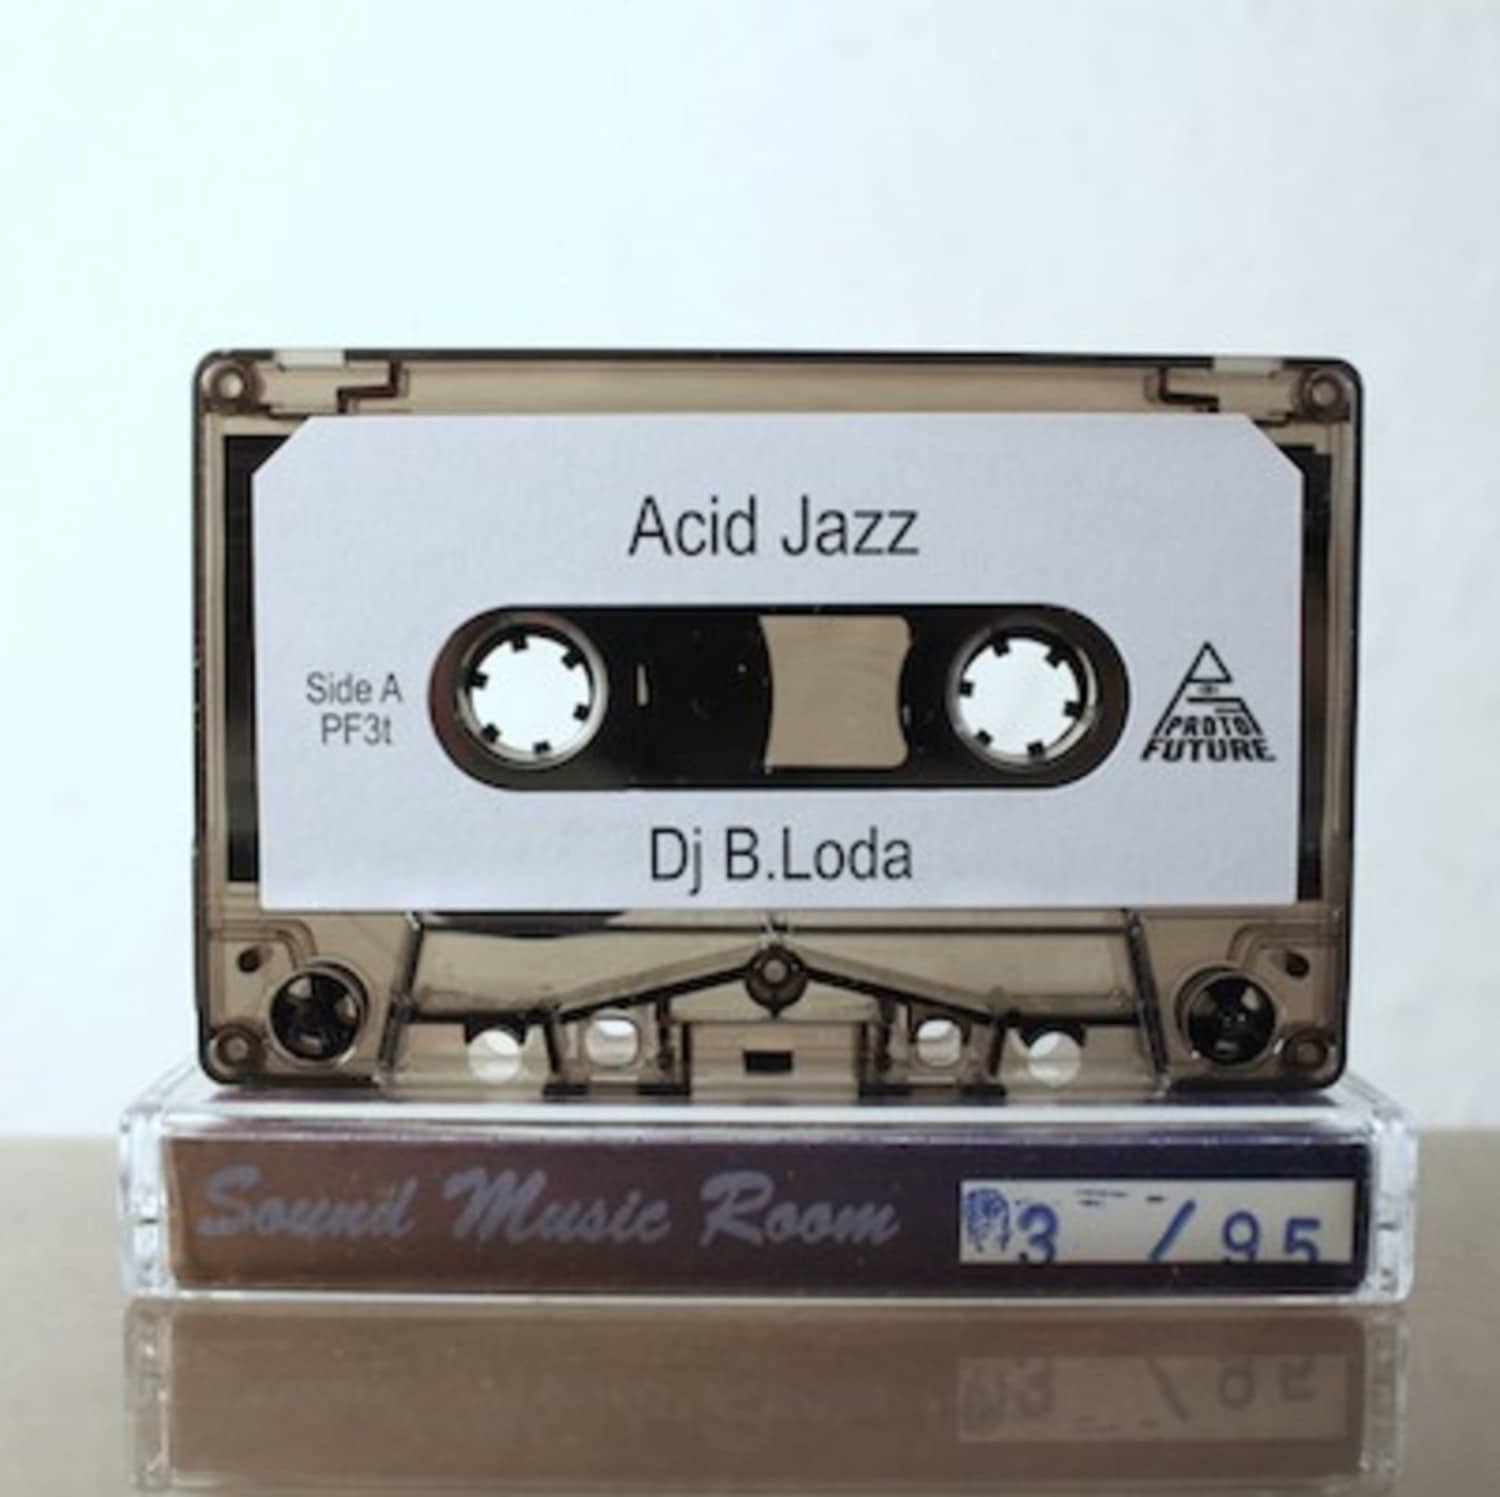 DJ B. Loda - ACID JAZZ 03/95 